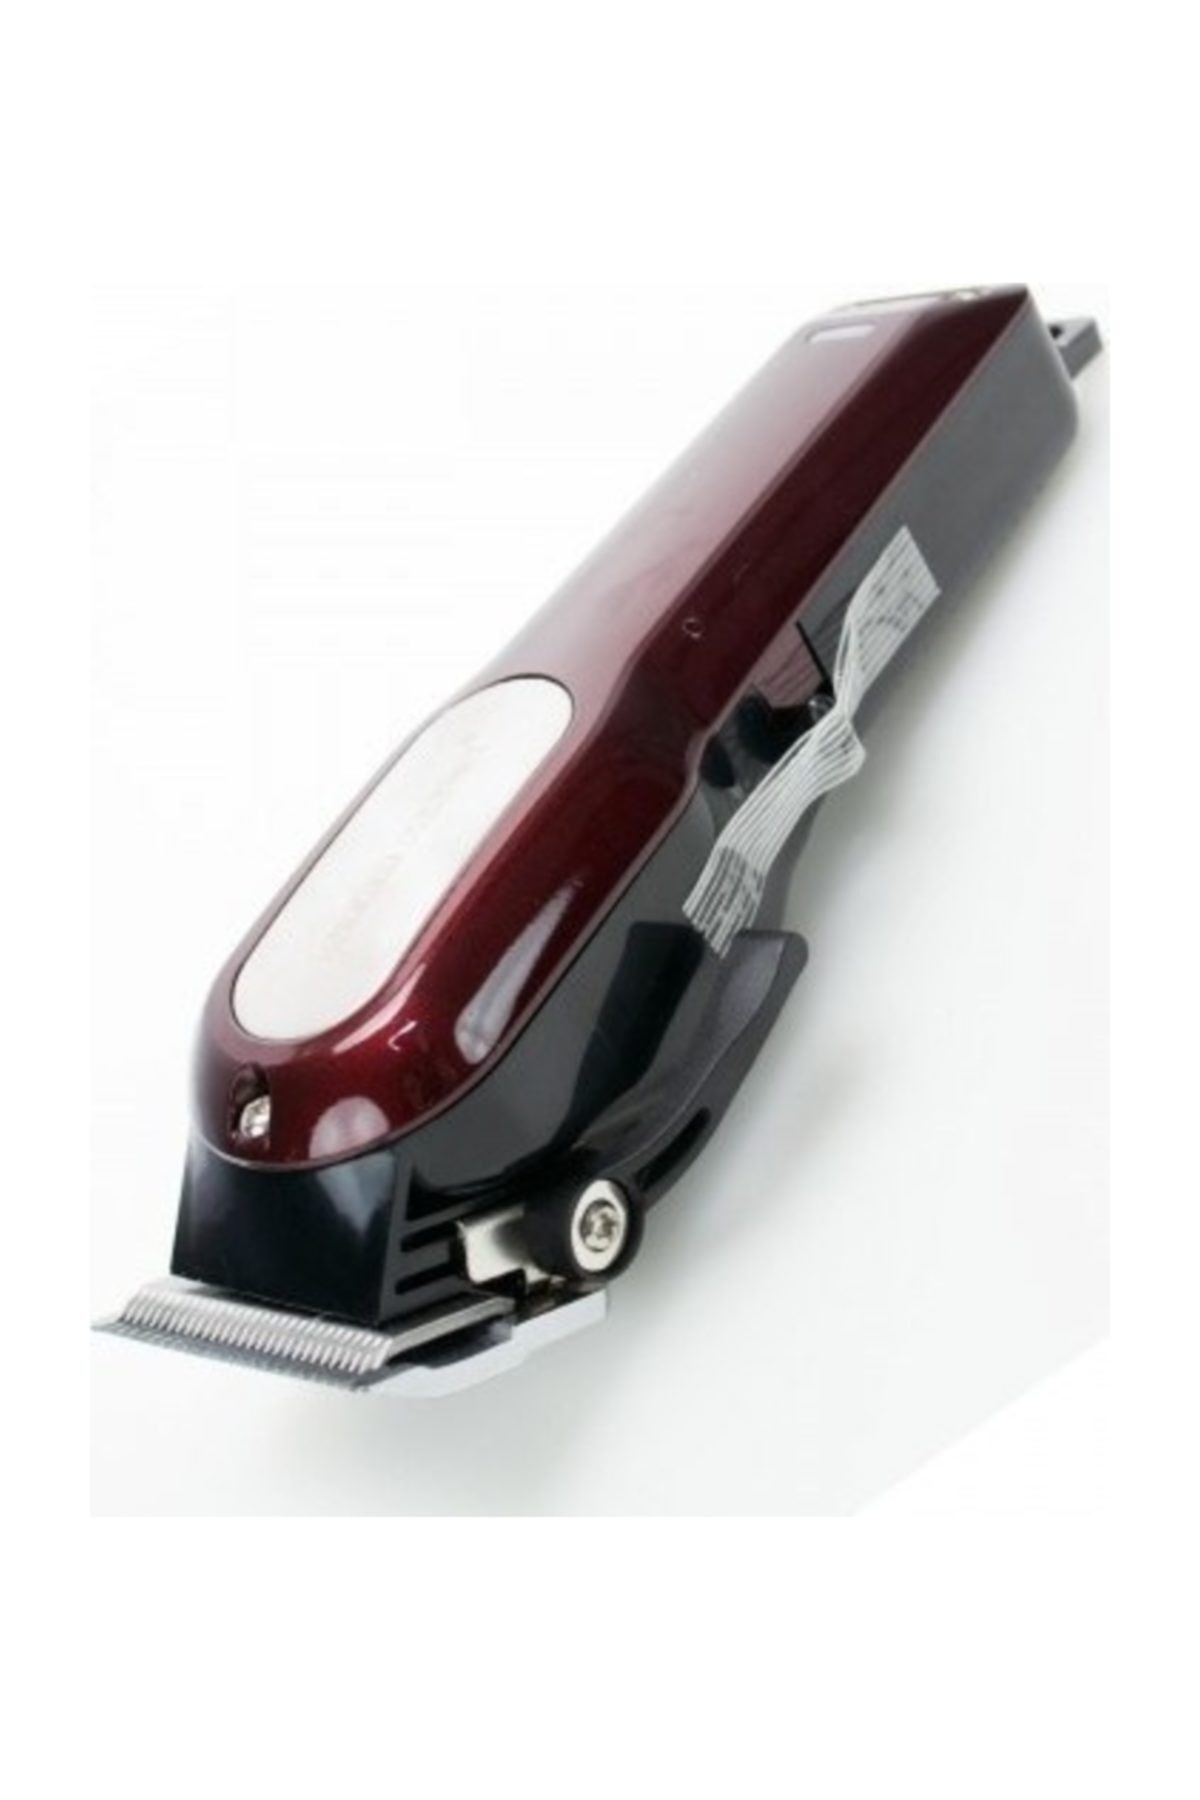 İnter Mac3 Tc-1453 Profesyonel Saç Sakal Kesim Makinesi